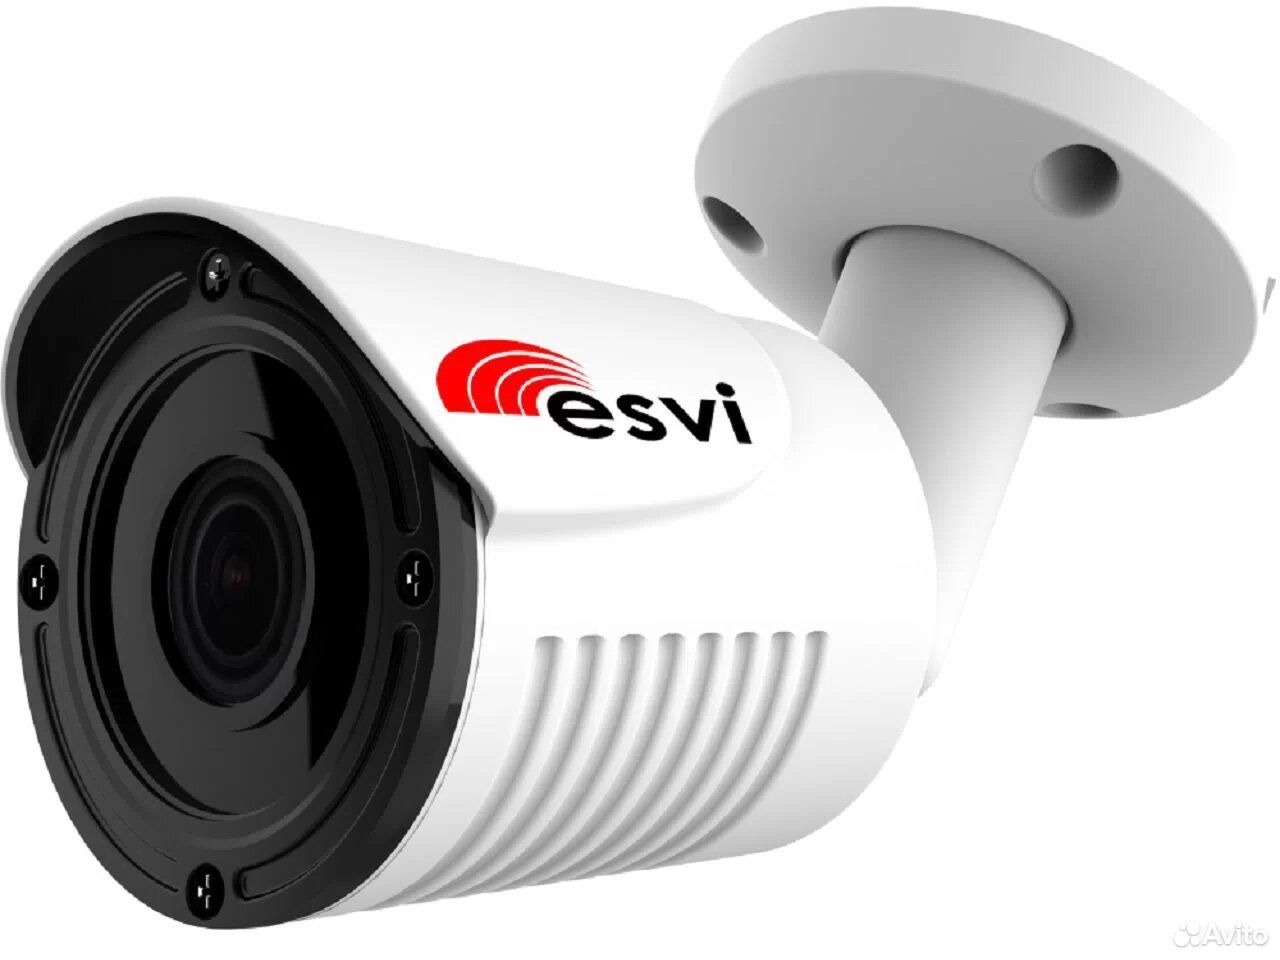 Камера видеонаблюдения 3 мп. Px-IP-bh30-f23-p BV уличная IP видеокамера 2.0МП F 2.8мм POE. ESVI EVC-bh30-sl20-p/c (BV) уличная IP видеокамера, 2.0МП, F=2.8мм, POE, SD. ESVI EVC-bh30-s20-p/c уличная IP видеокамера, 2.0МП, F=3.6мм, POE, SD. ESVI EVC-bh30-f22-p (BV) уличная IP видеокамера, 2.0МП, F=2.8мм, POE.